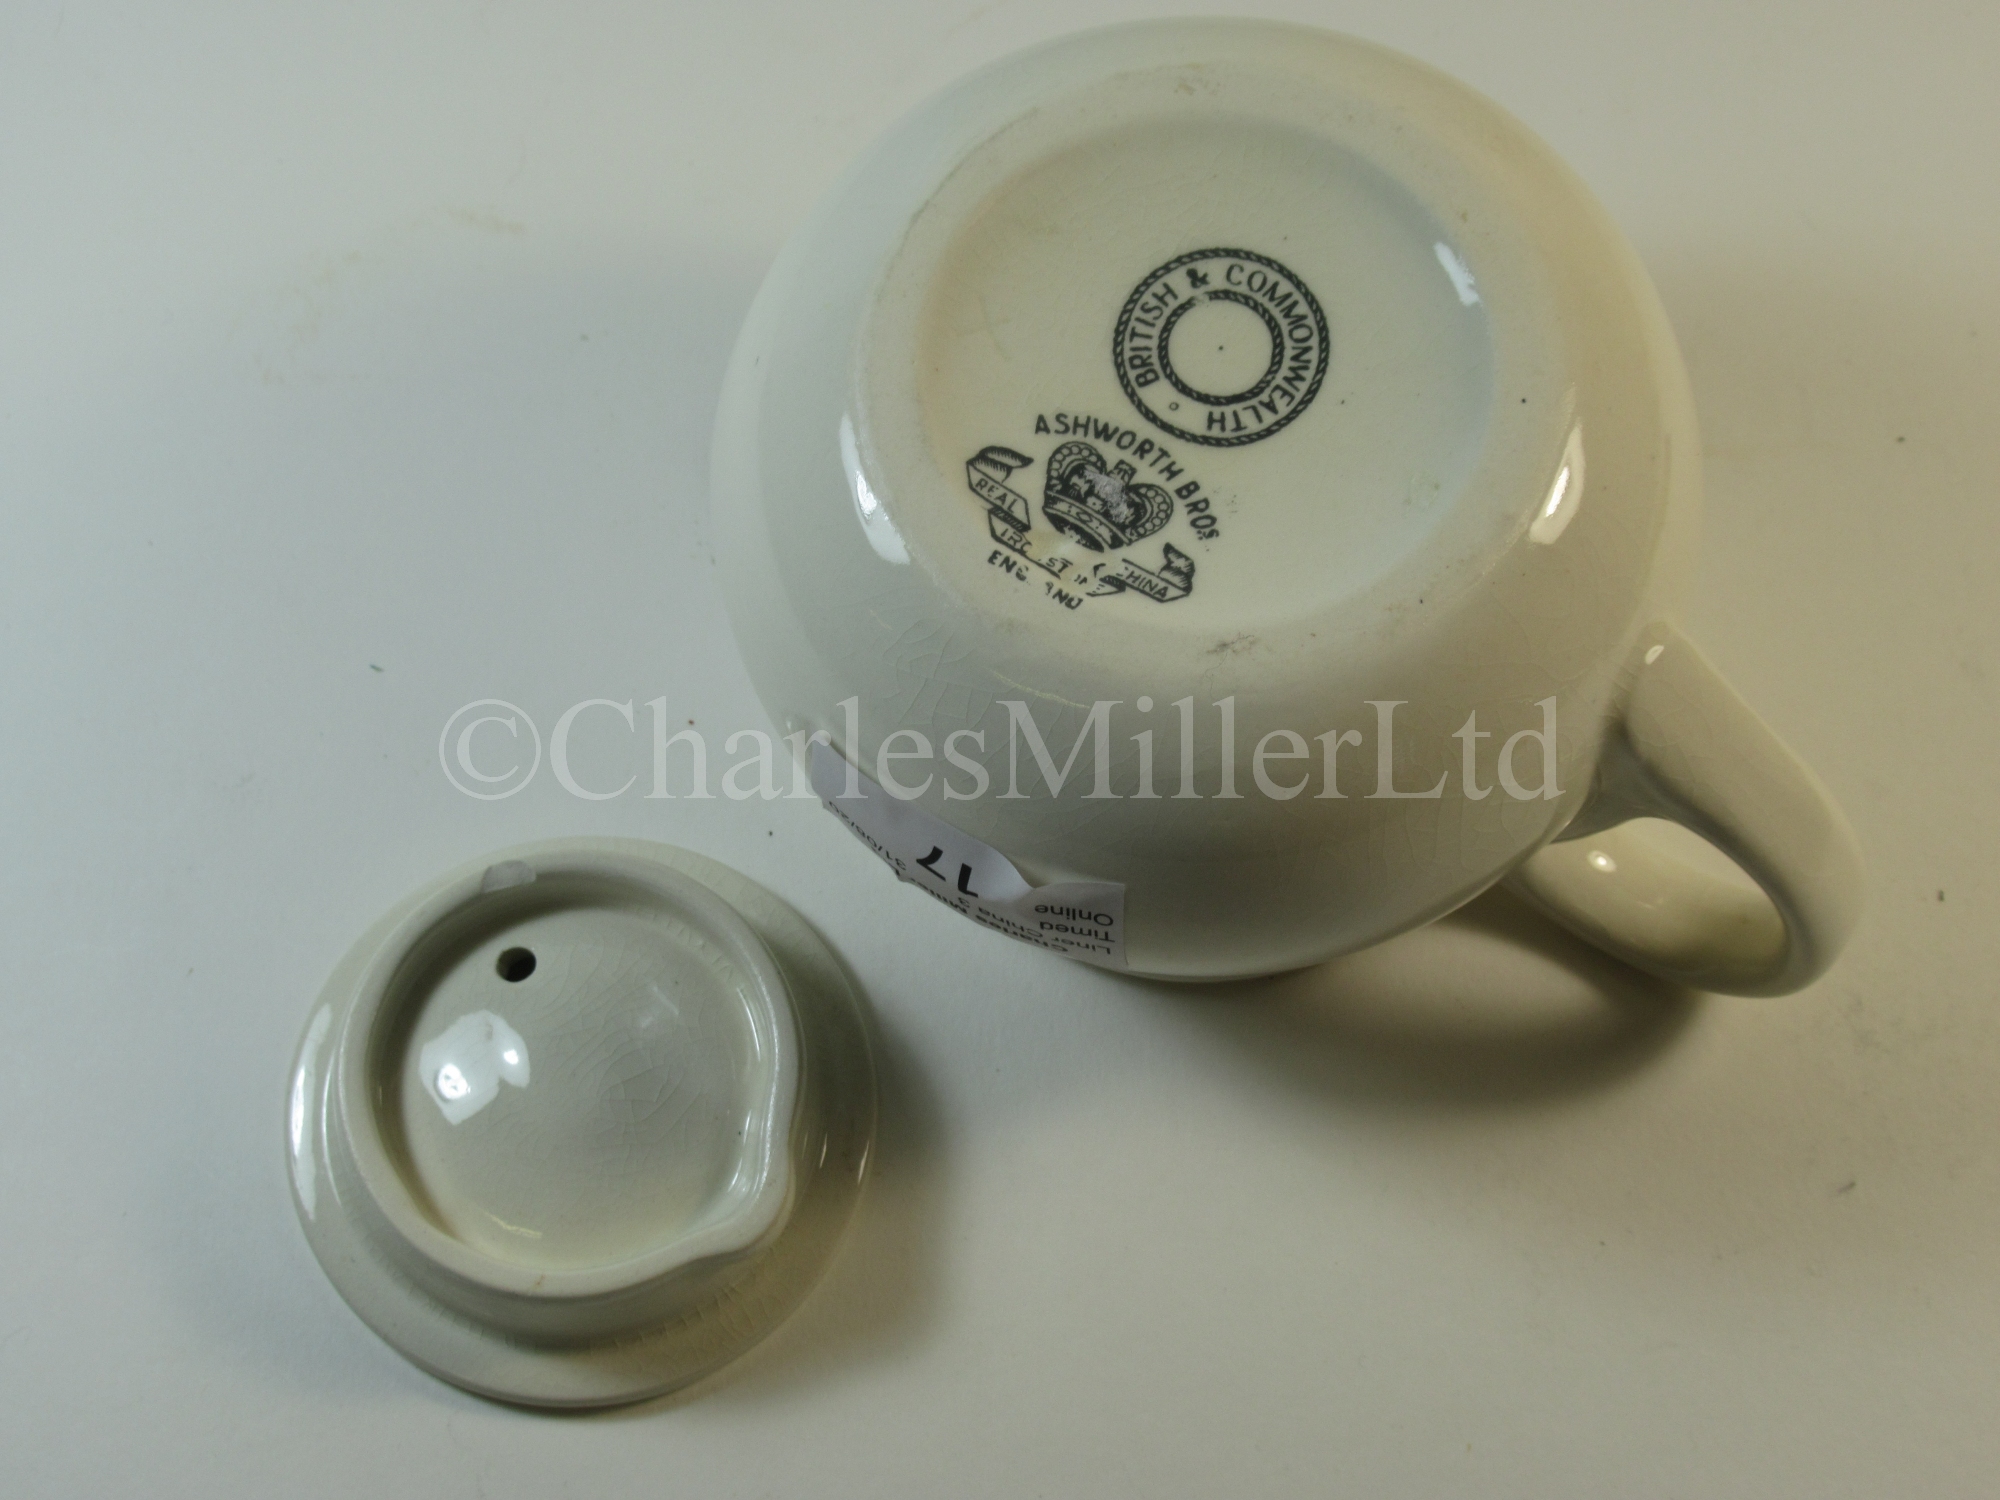 A British & Commonwealth Line tea pot - Image 2 of 7